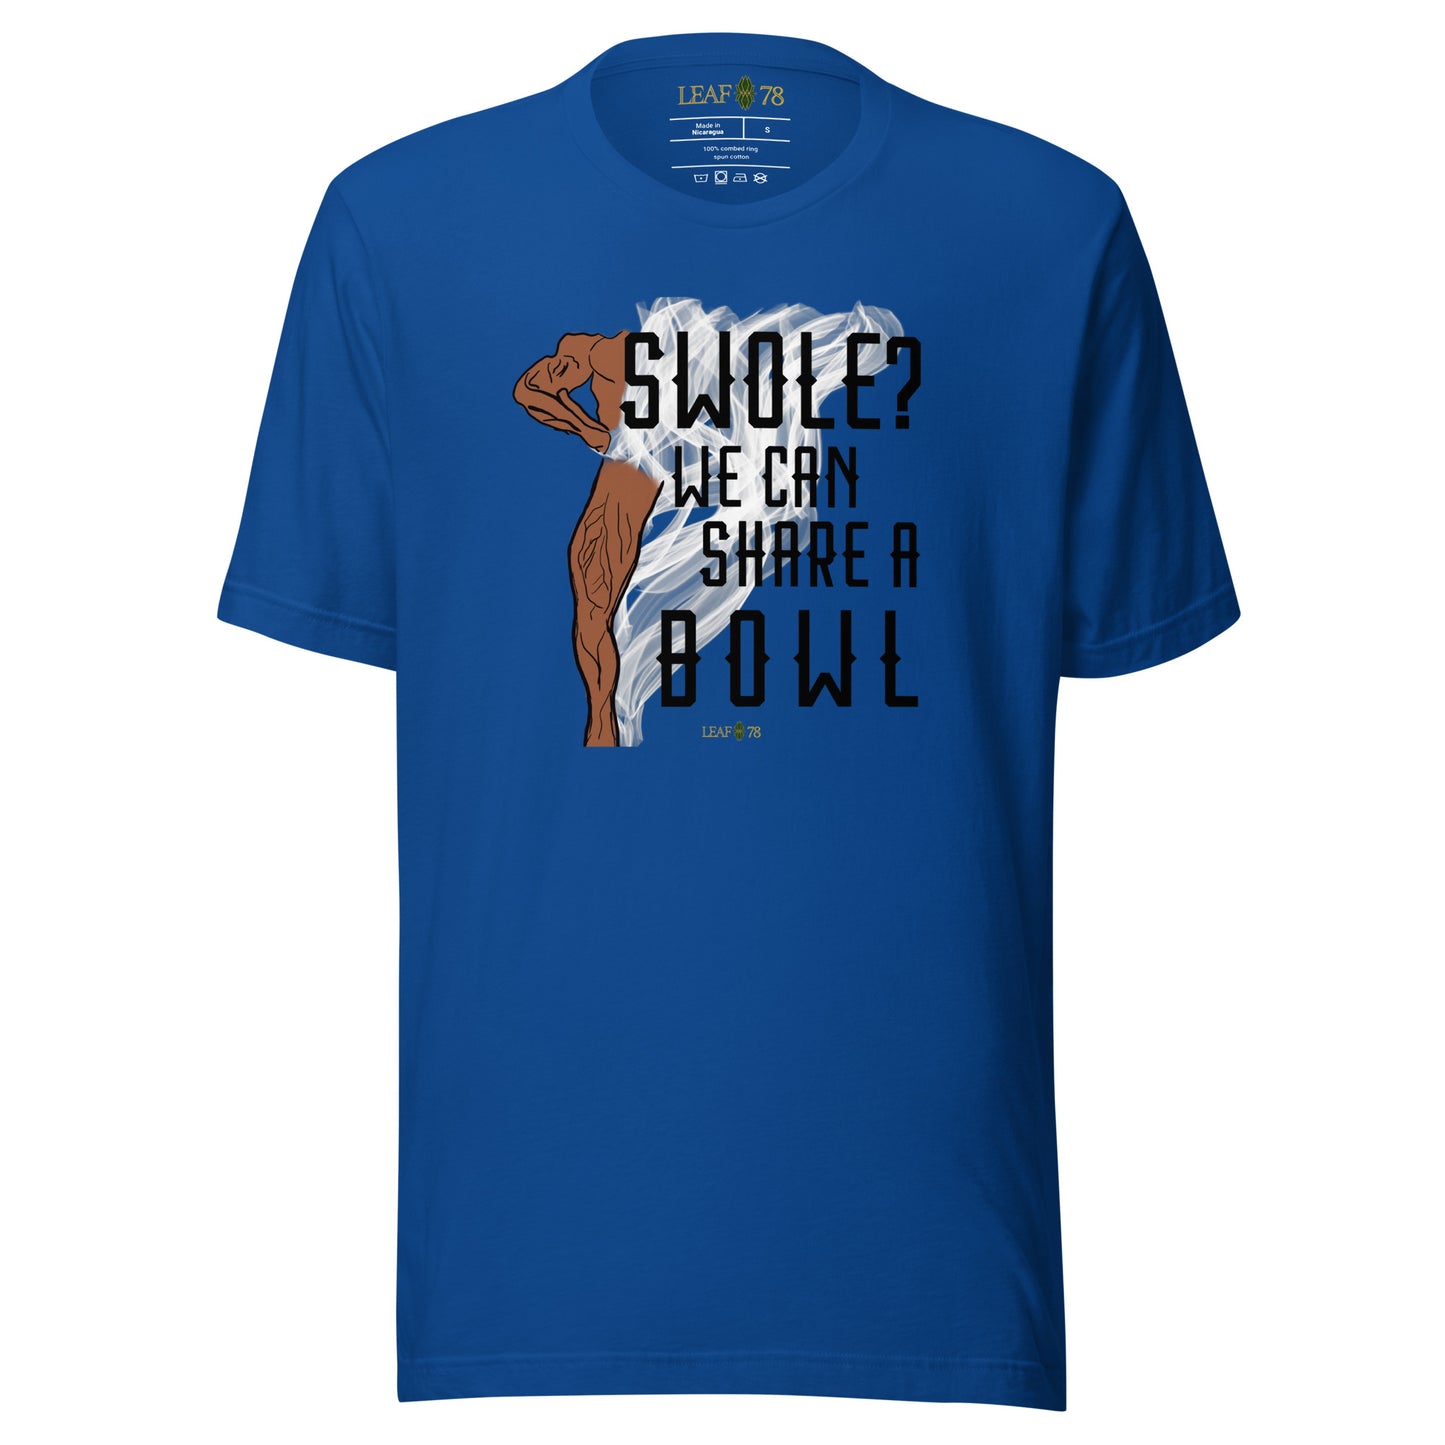 Swole Bowl t-shirt